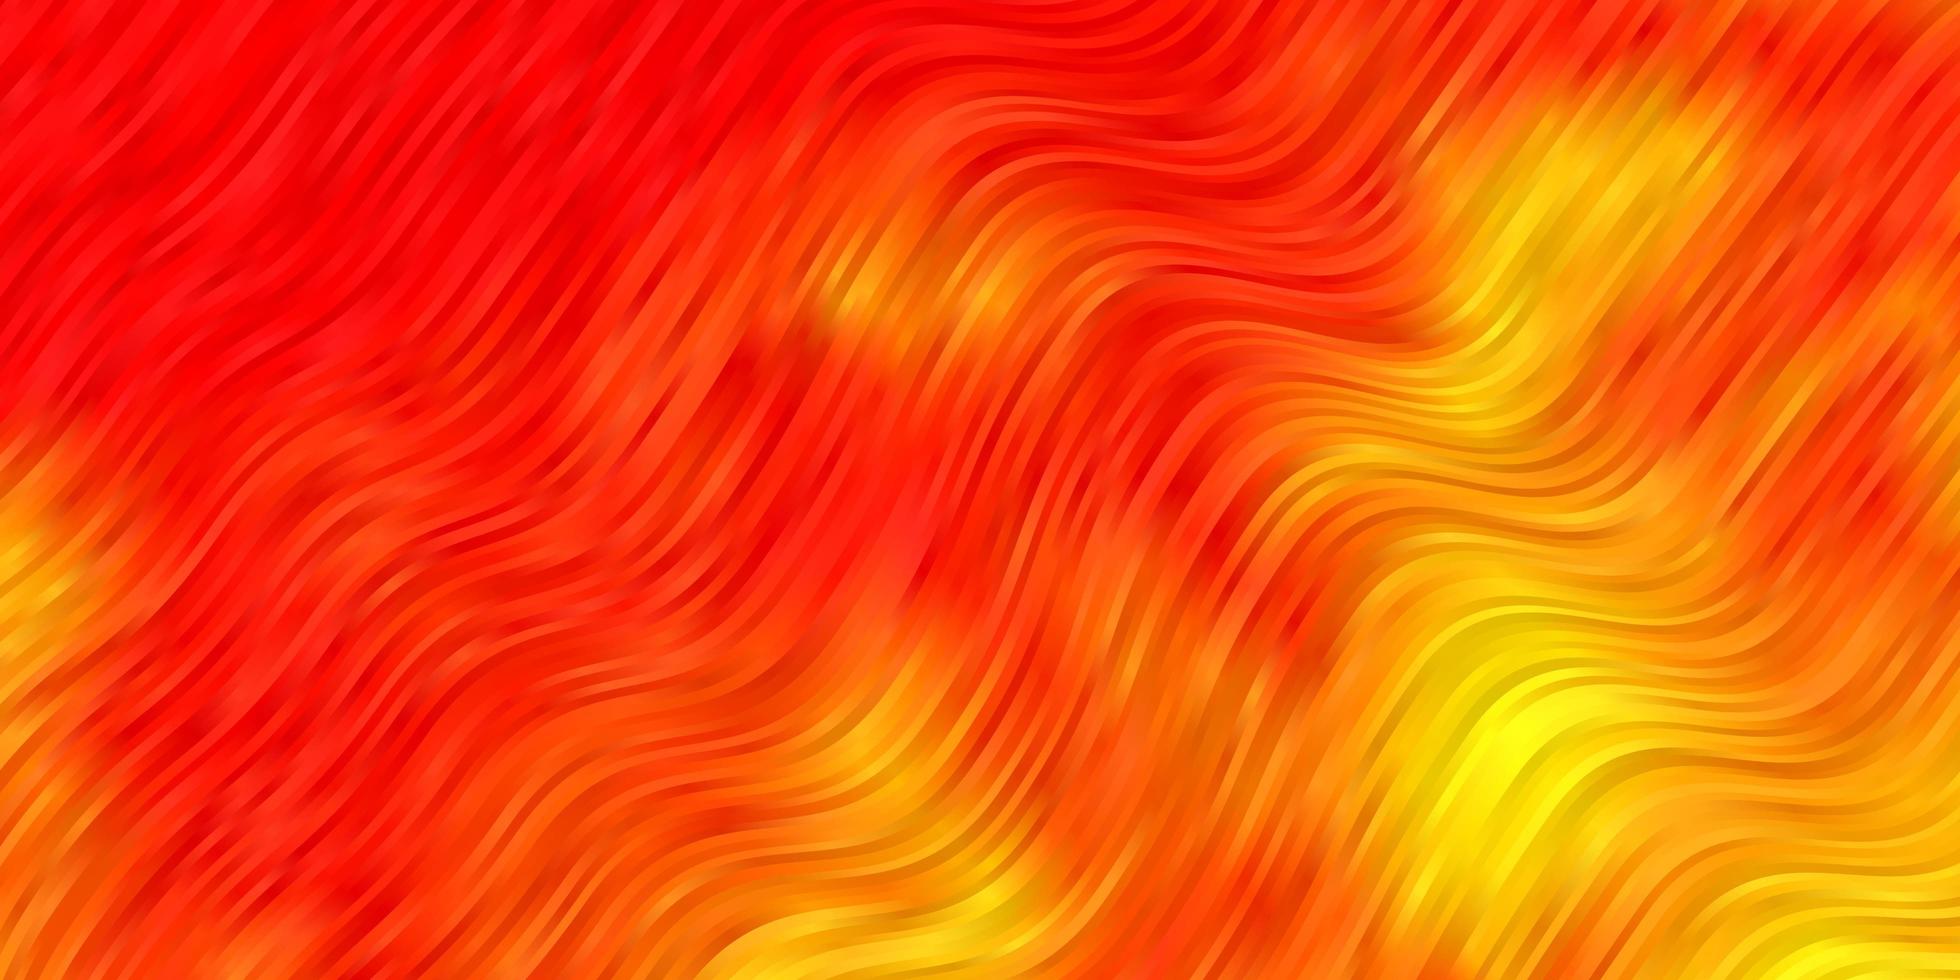 ljus orange vektor bakgrund med kurvor.